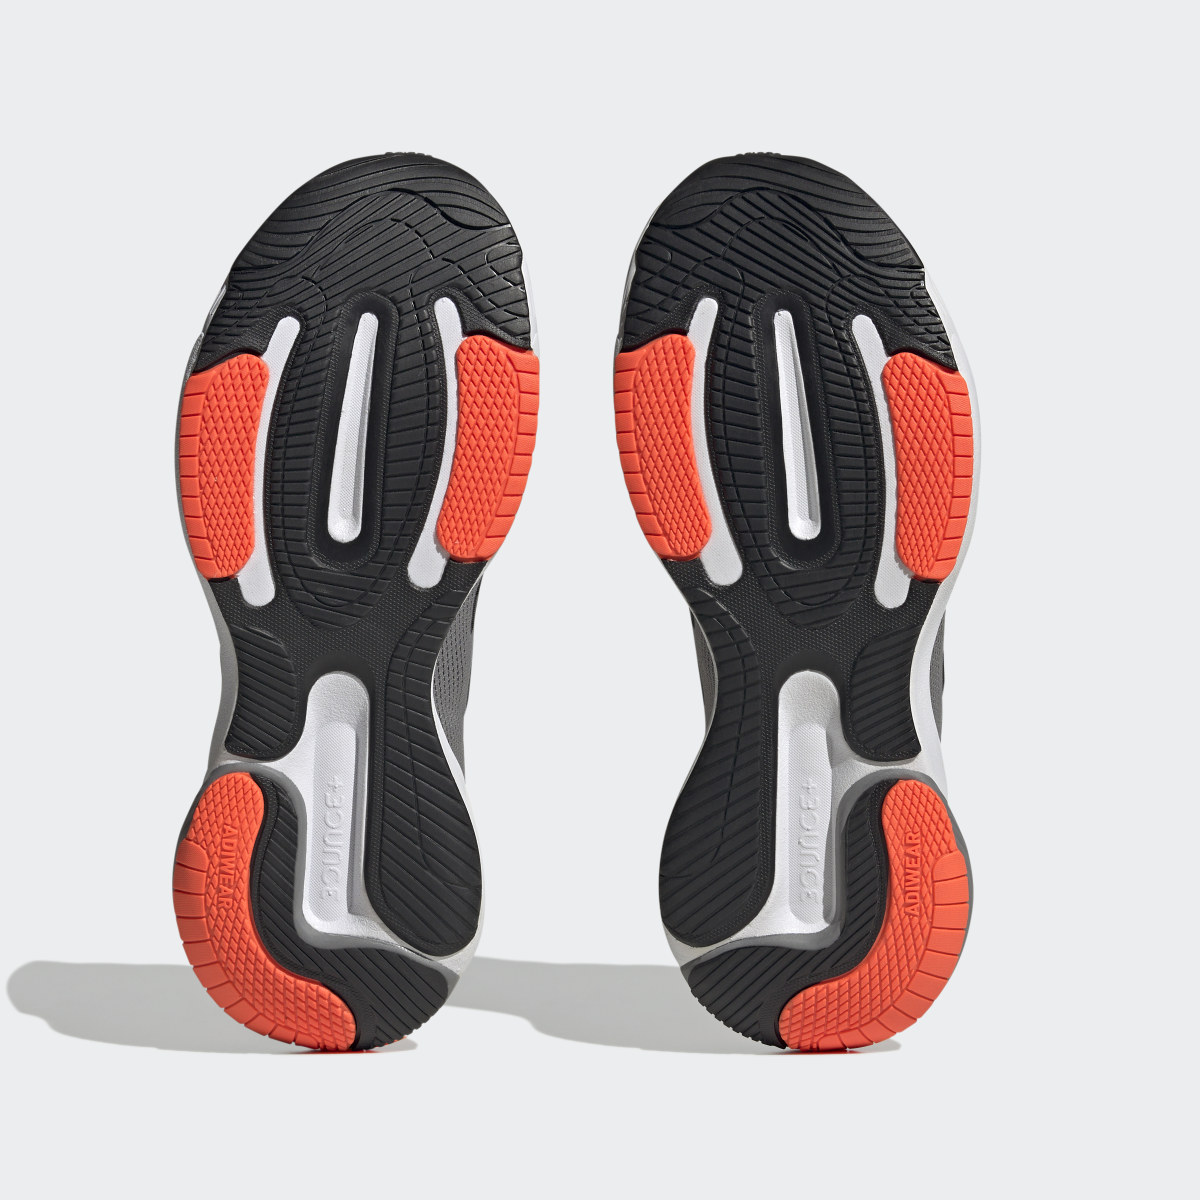 Adidas Response Super 3 Shoes. 4